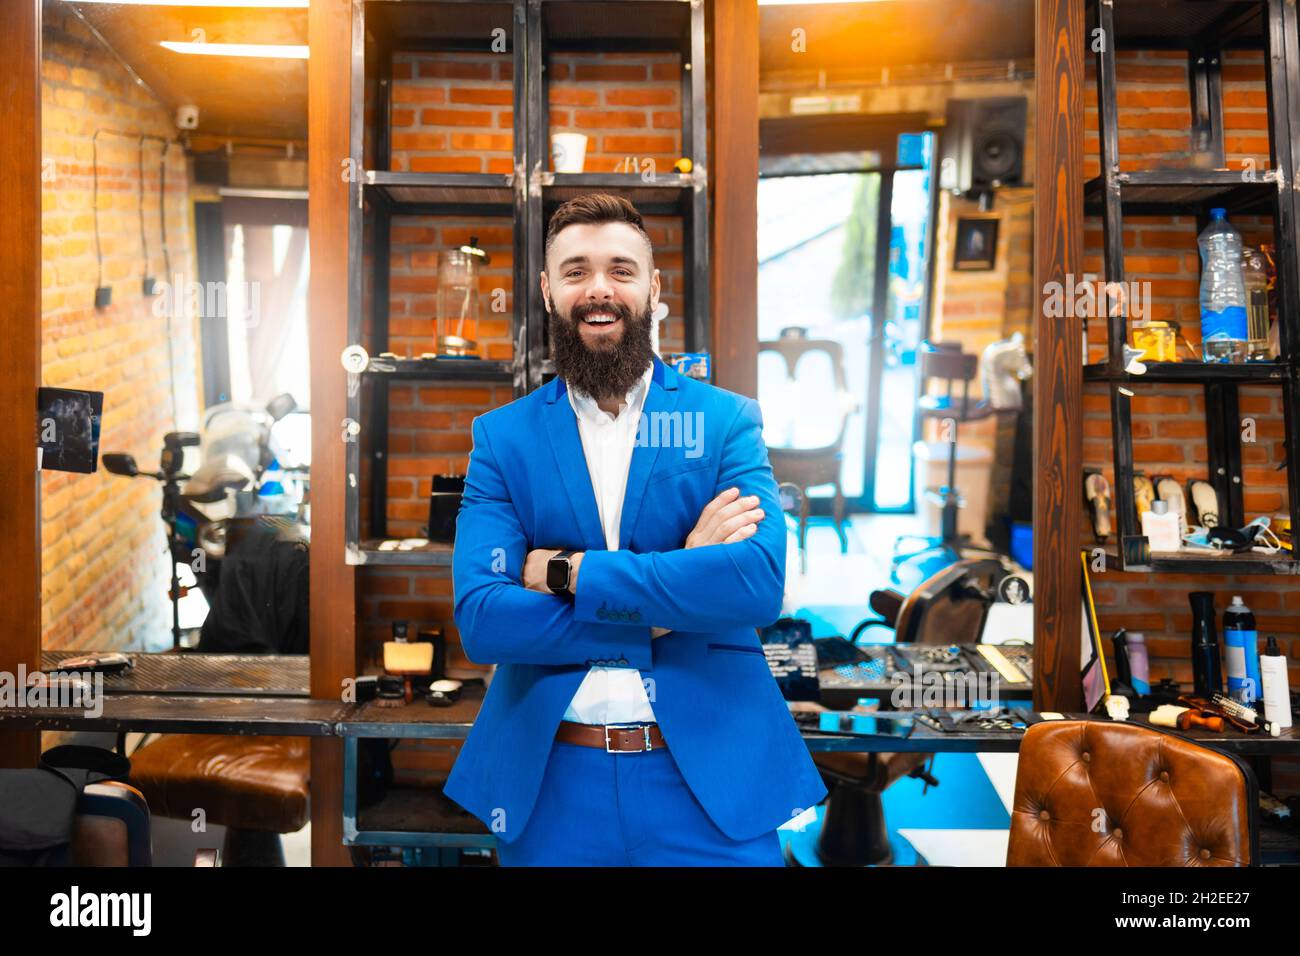 Hair salon owner posing inside his business Stock Photo